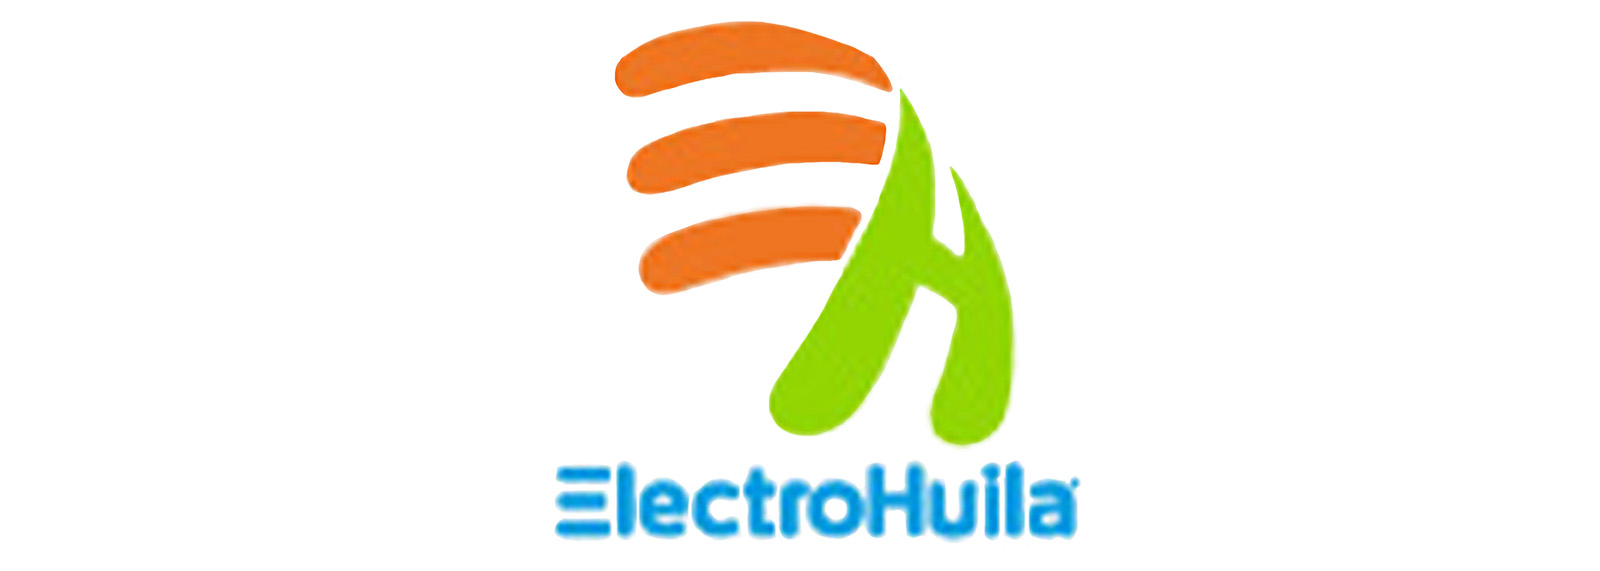 Electrohuila(2)